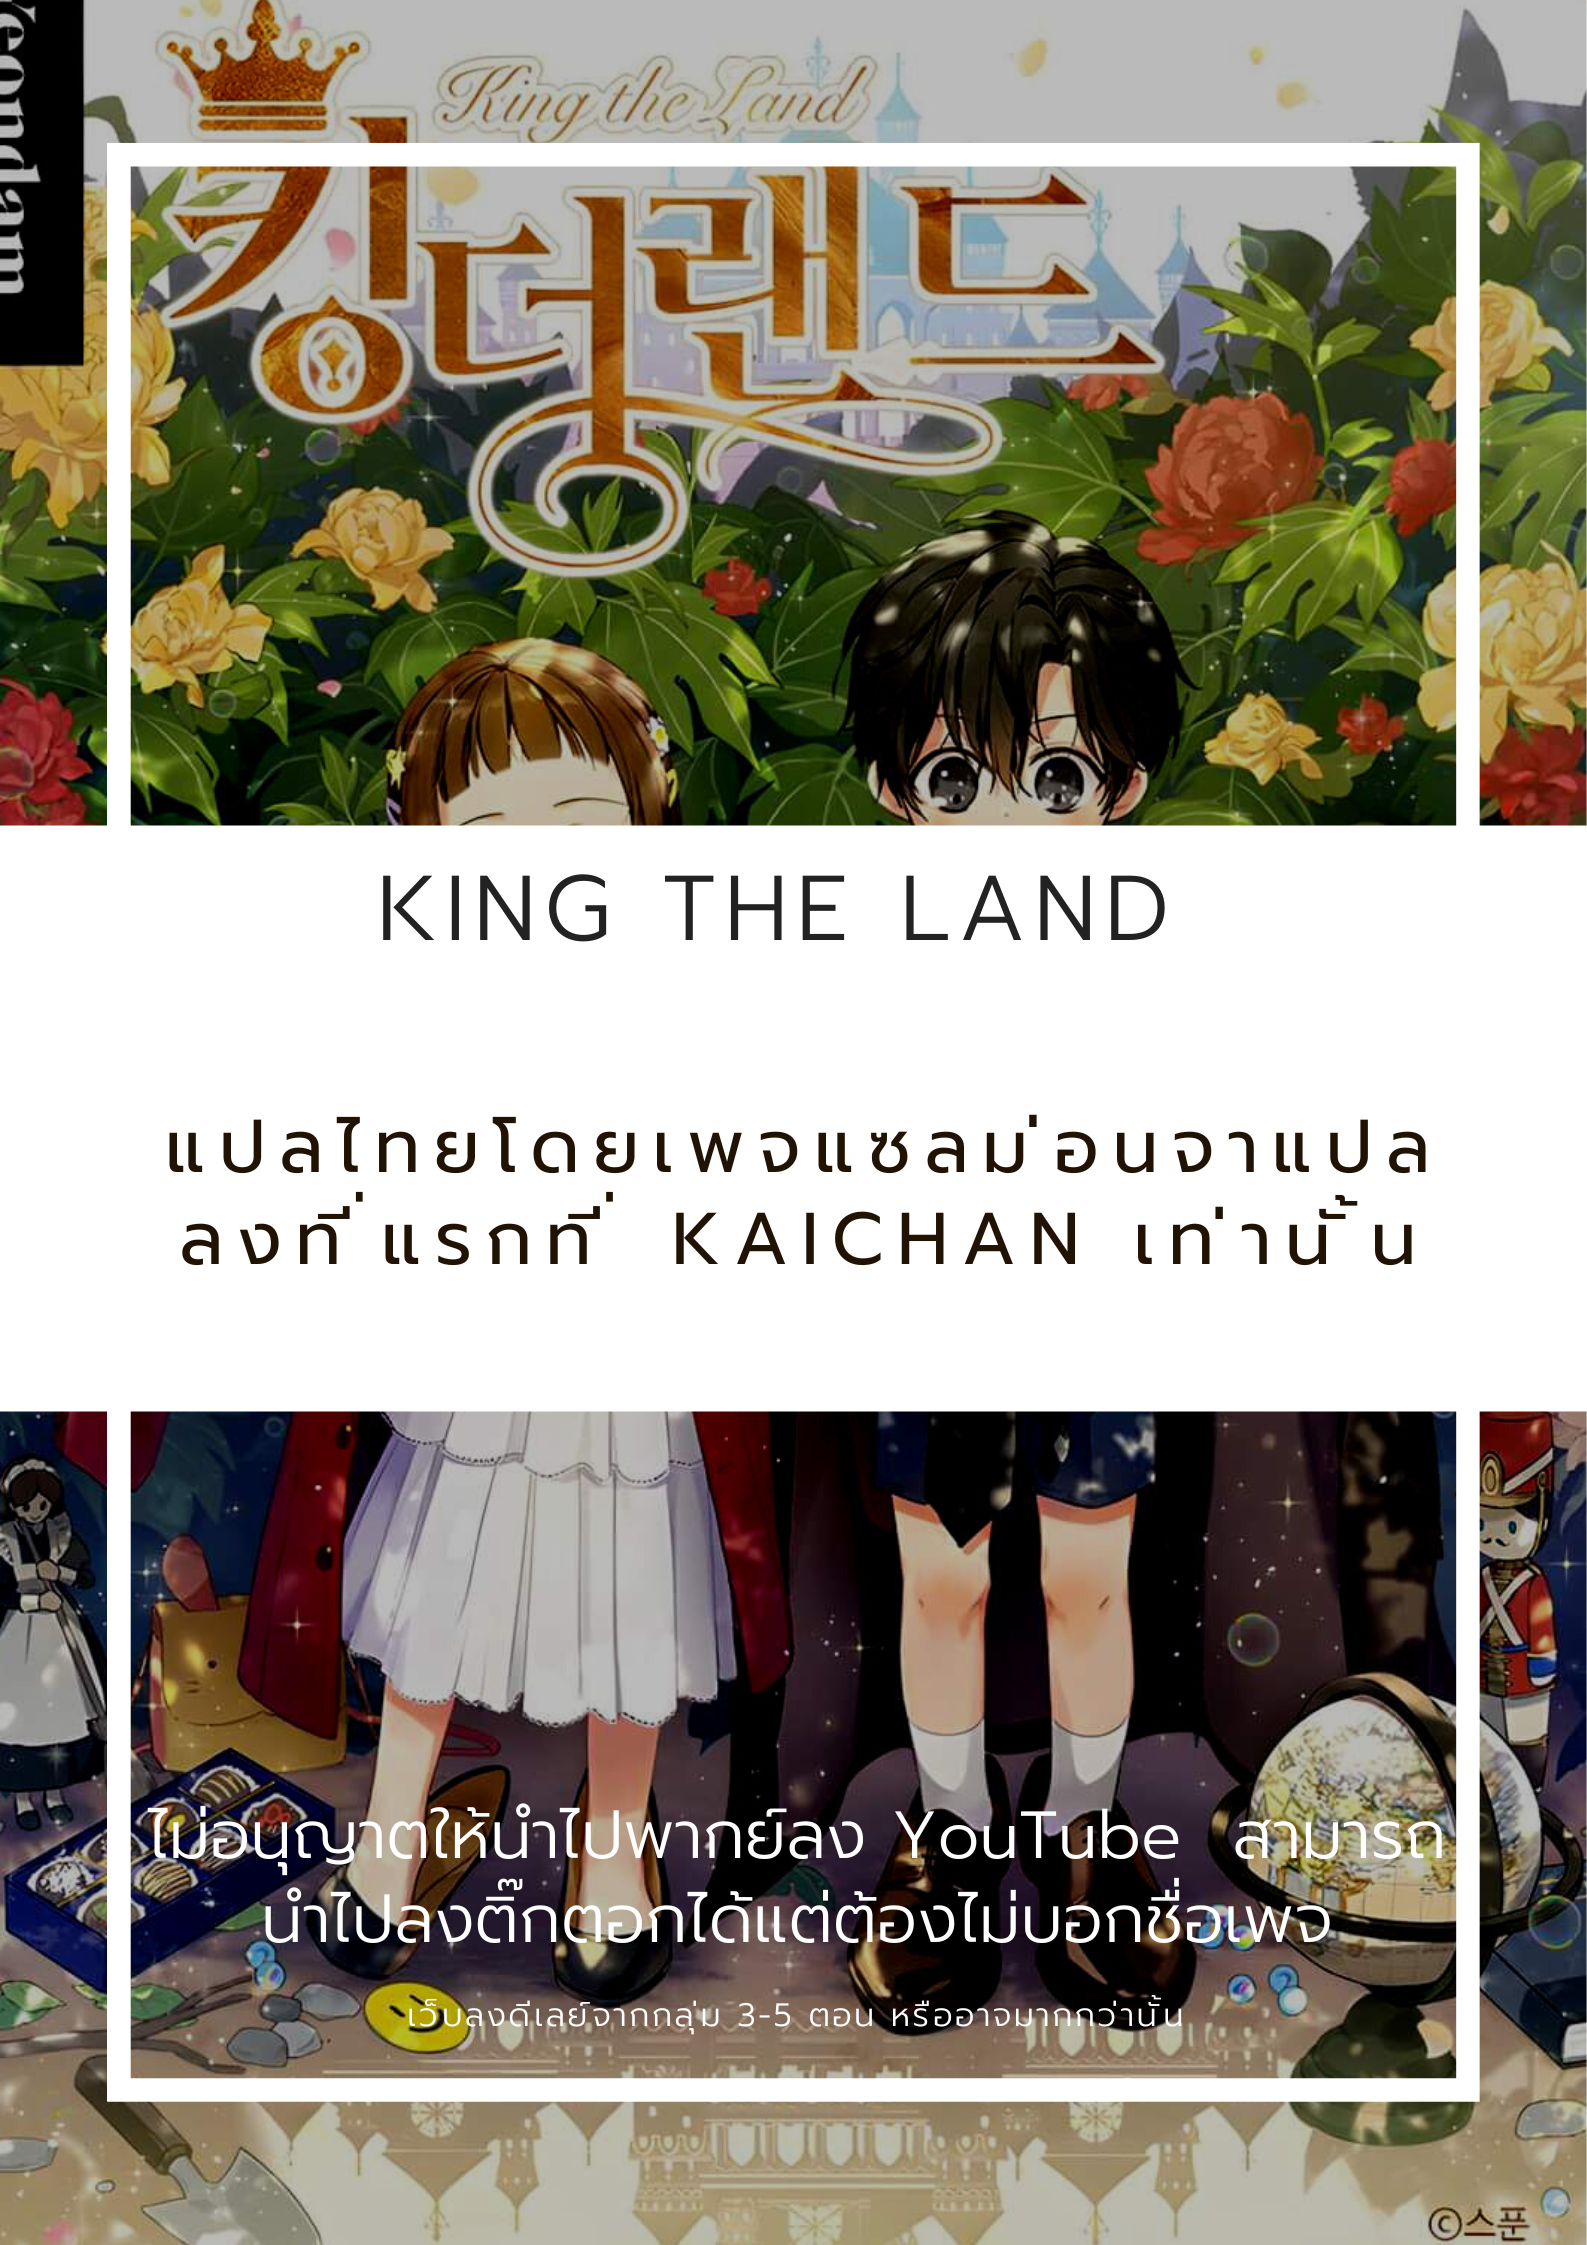 King the land ตอนที่ 6 (1)